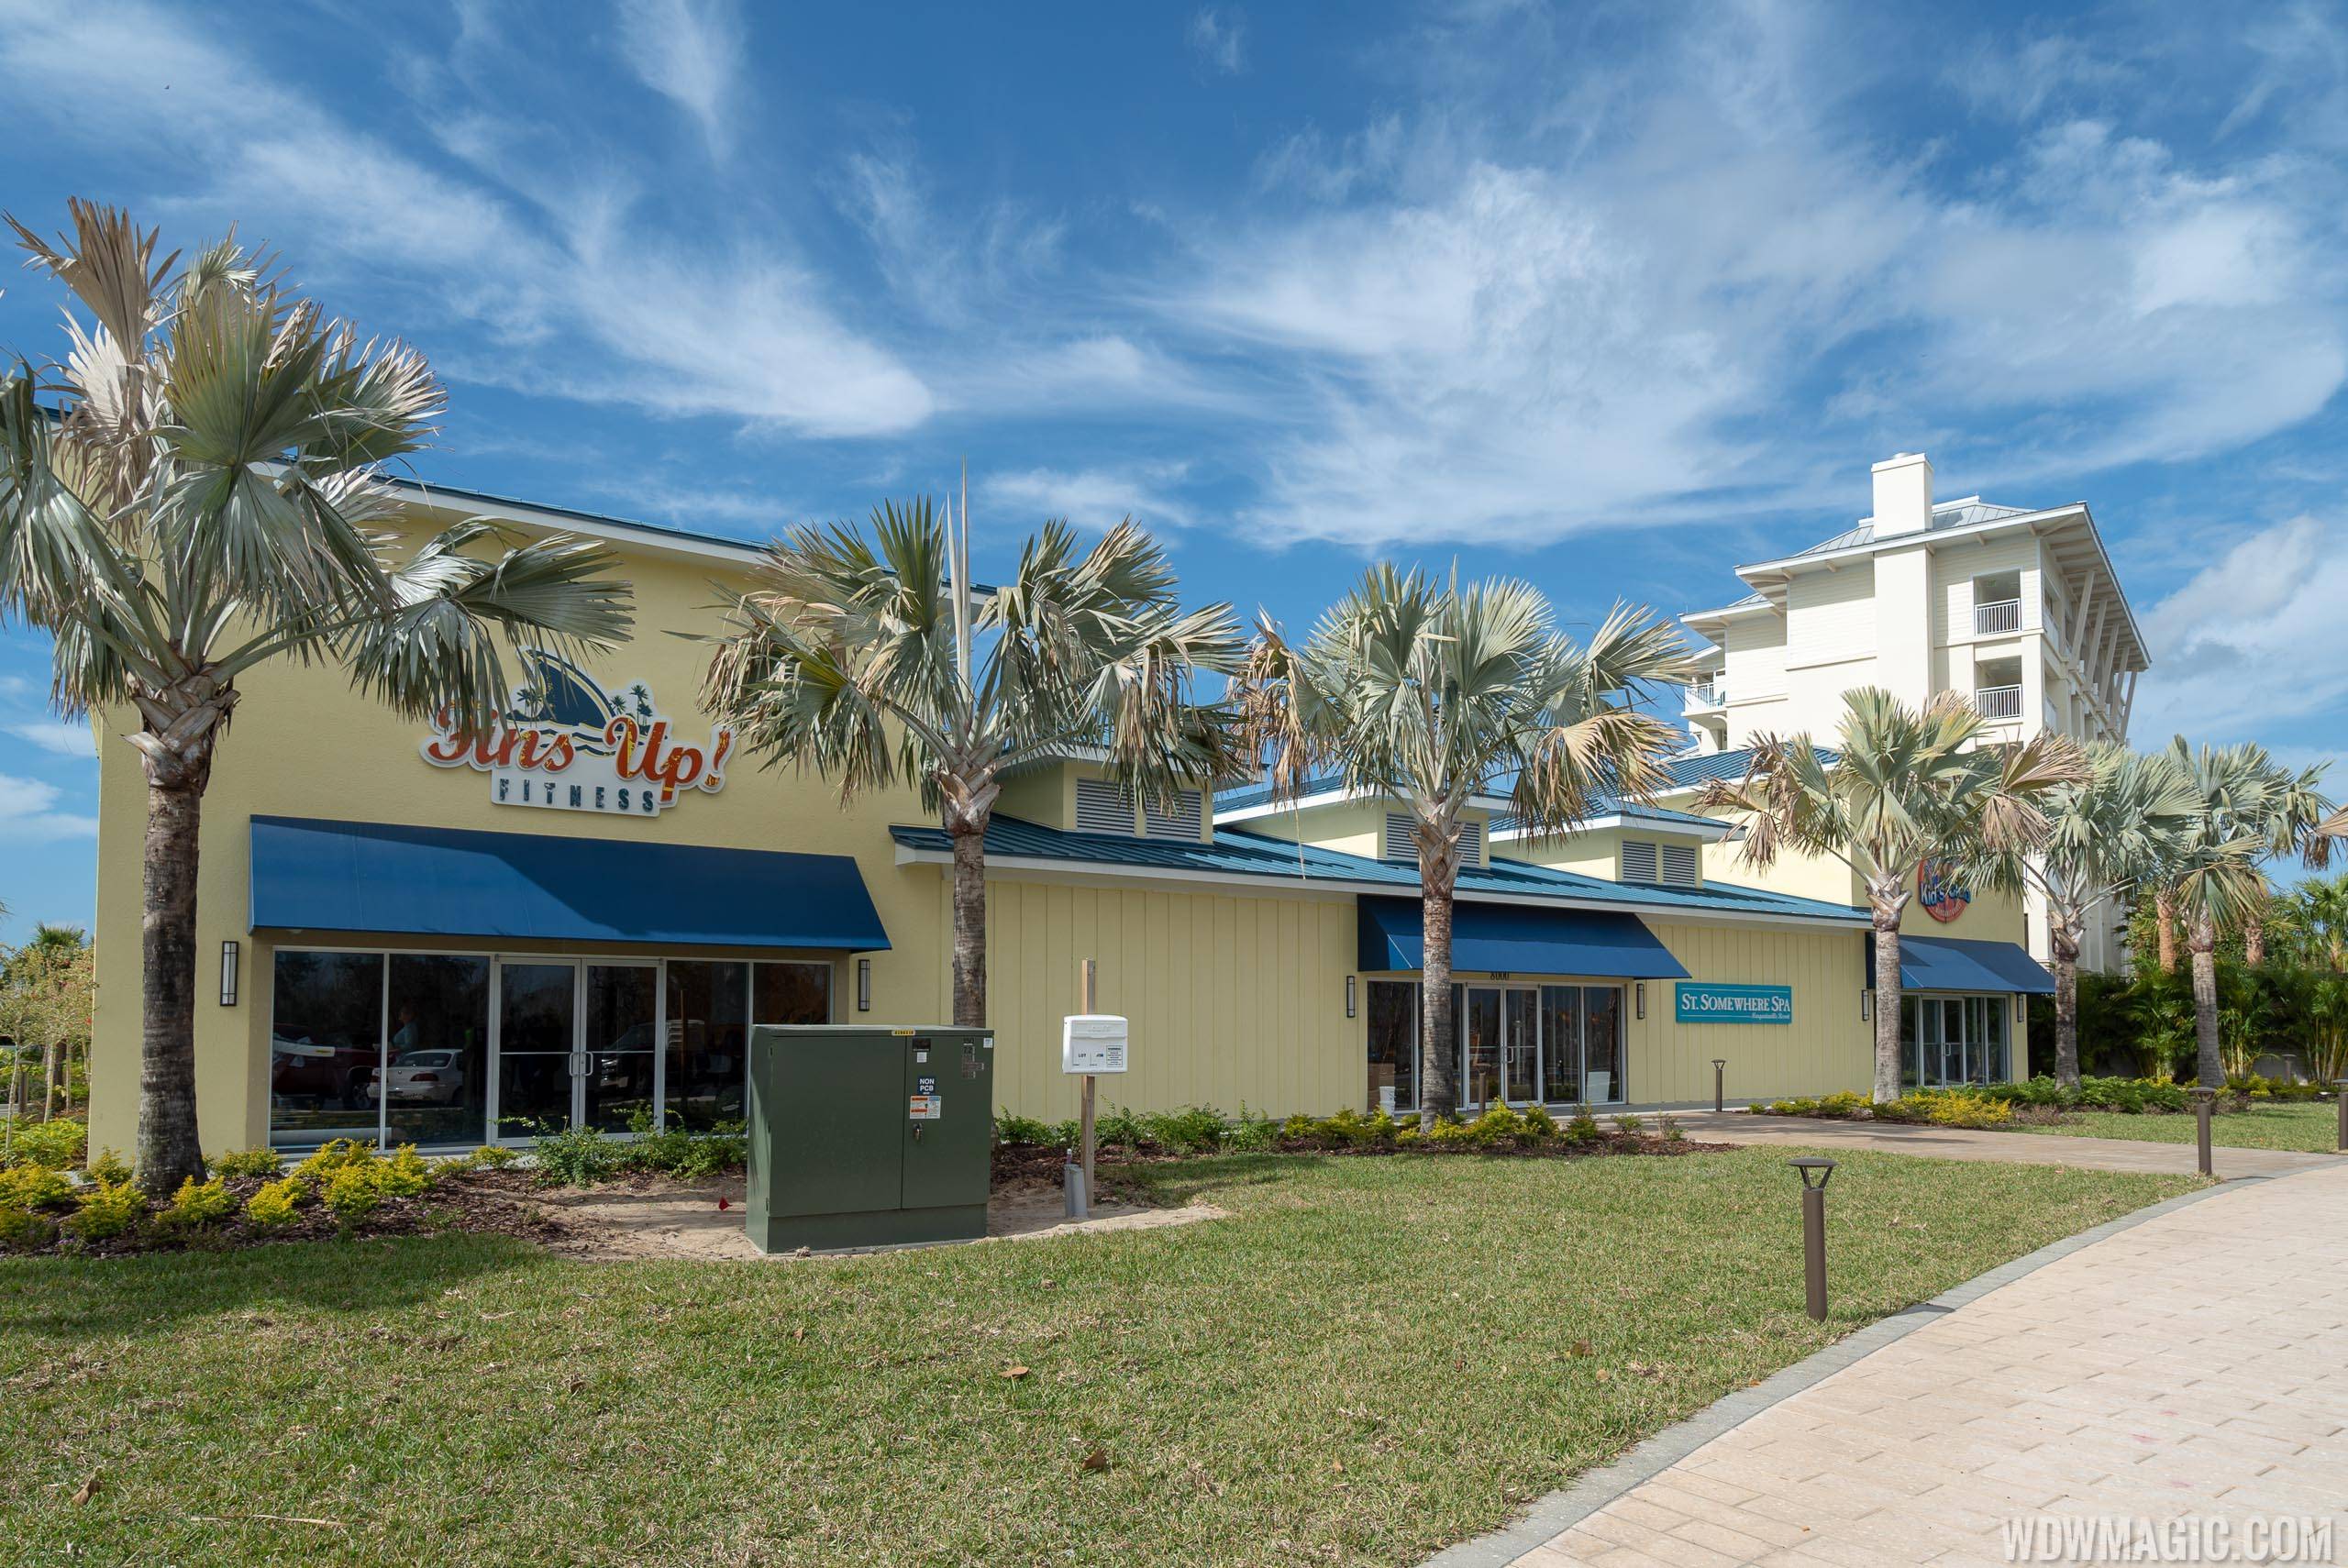 Margaritaville Resort Orlando tour